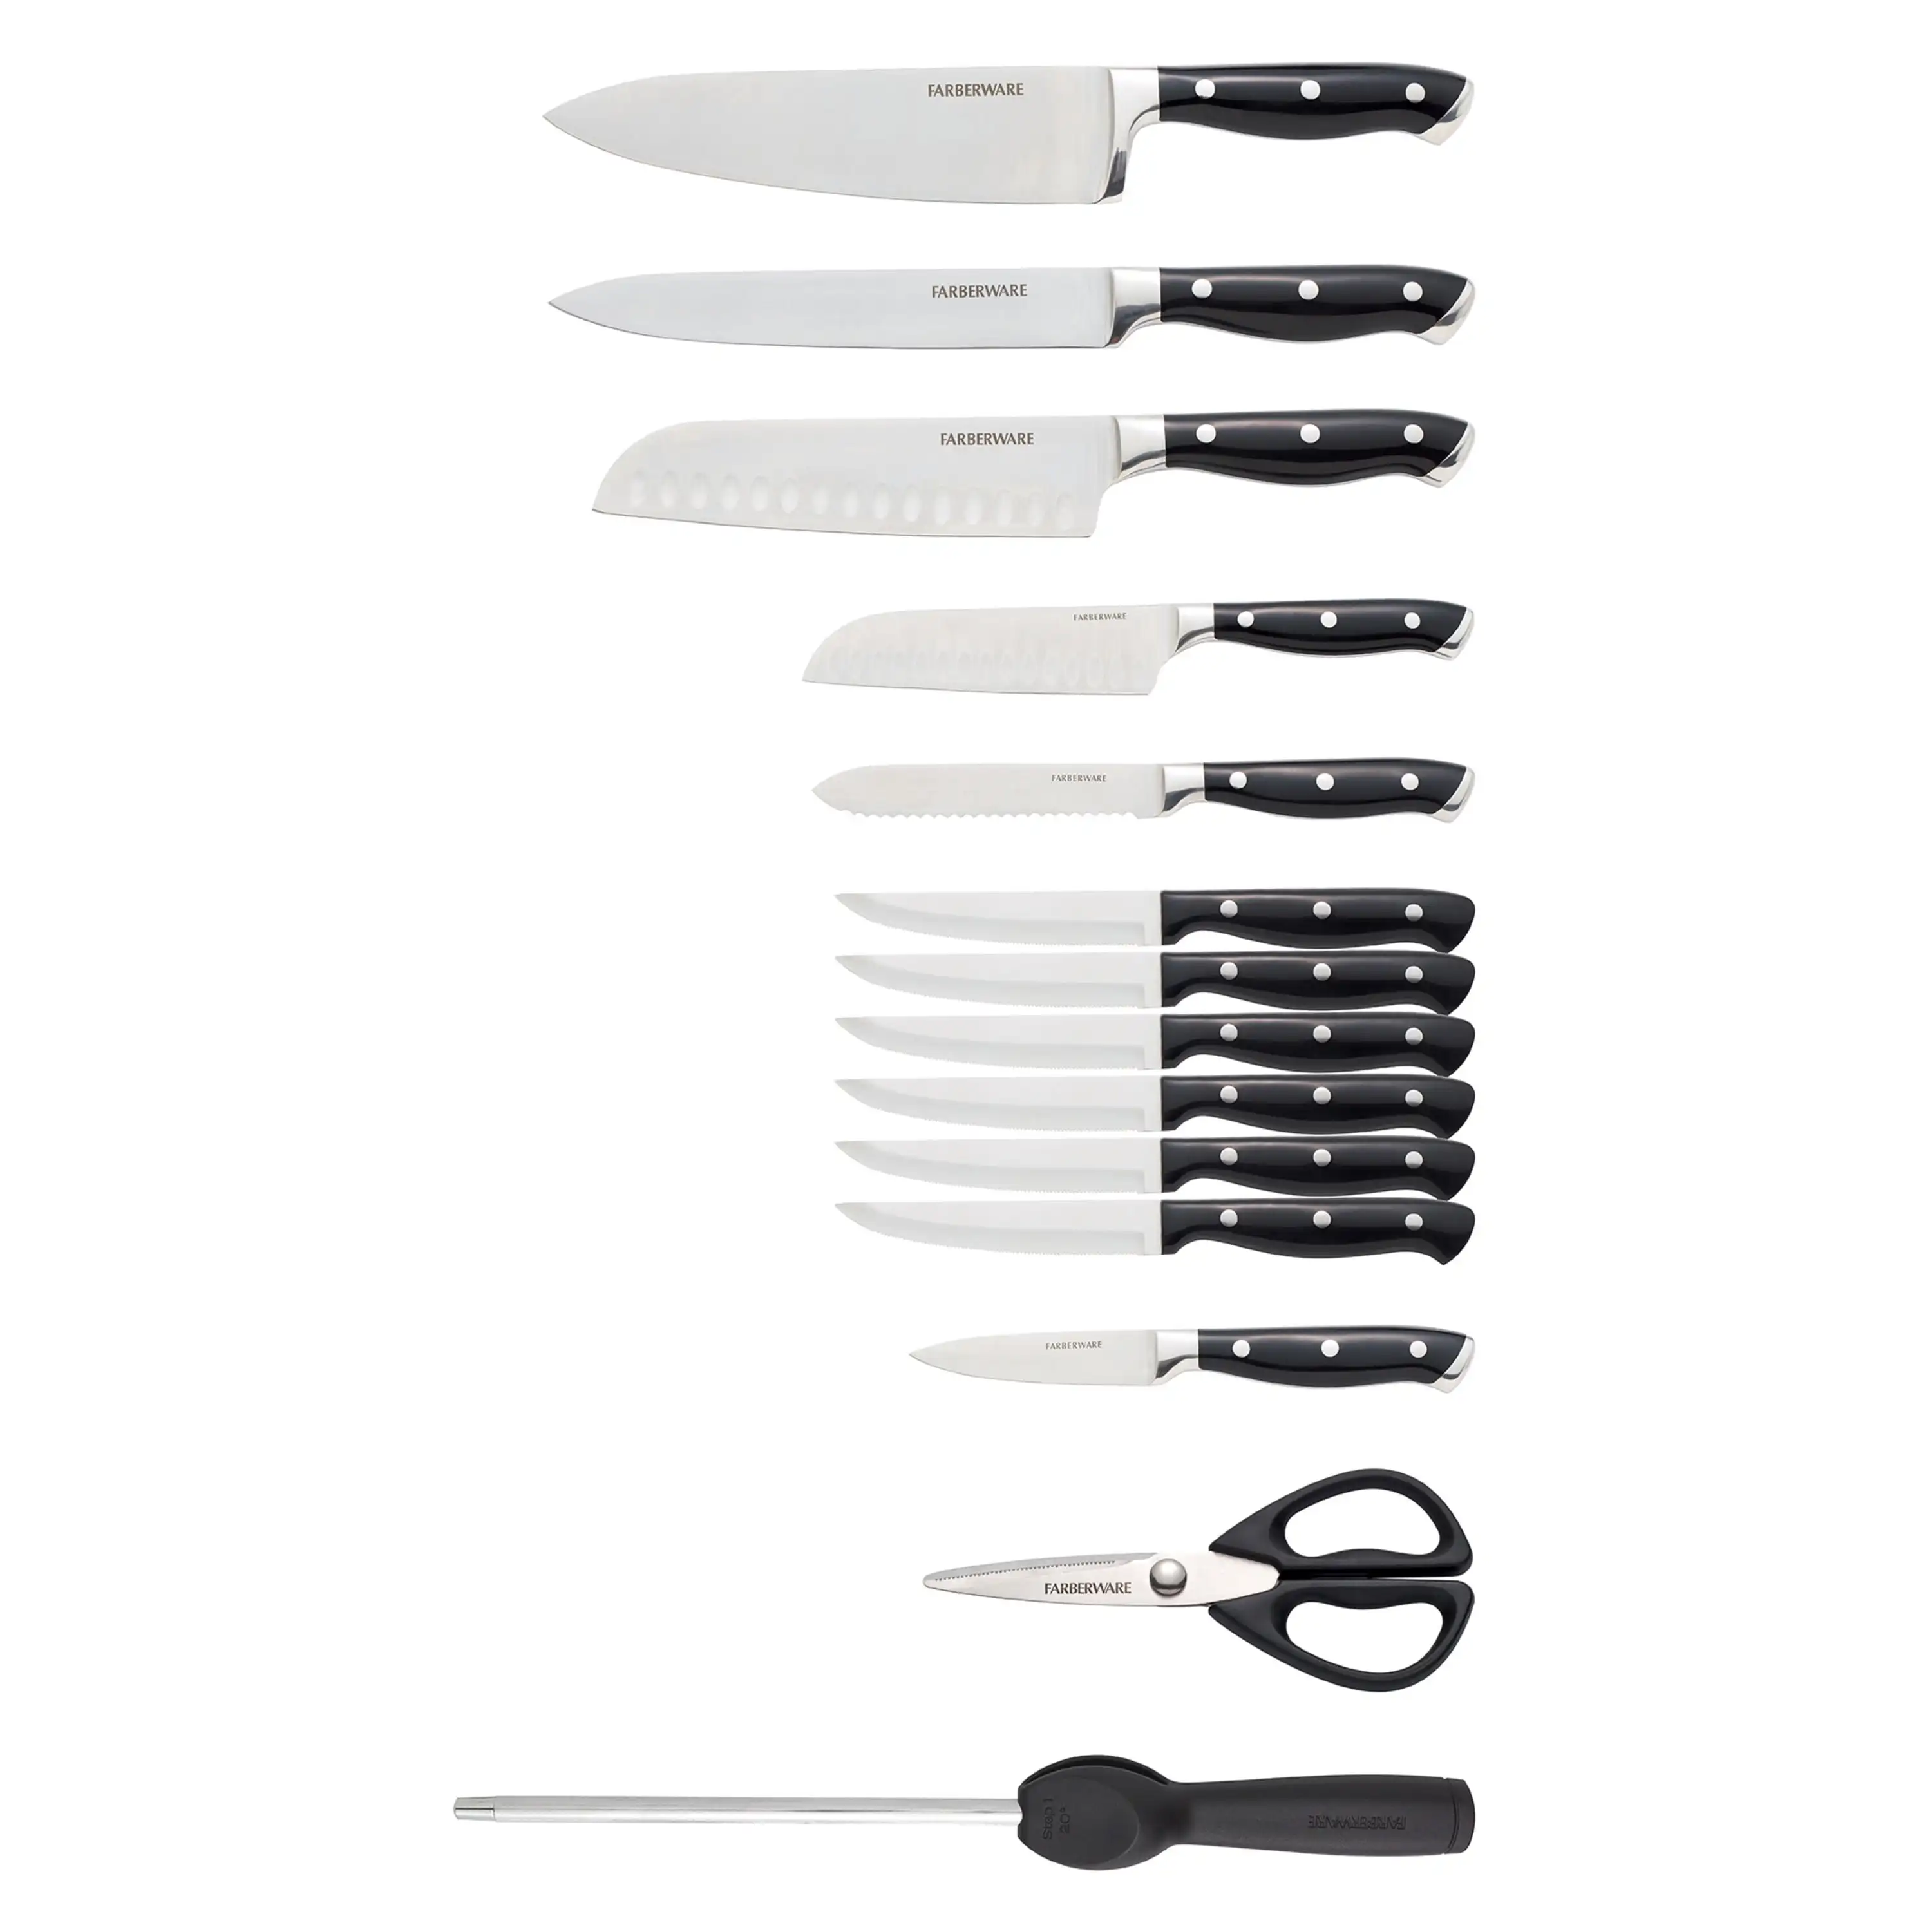 https://ae01.alicdn.com/kf/Se7b7d69e0034489999556820f5792454n/Farberware-15-piece-Black-Forged-Triple-Riveted-Stainless-Steel-Knife-Set.jpg